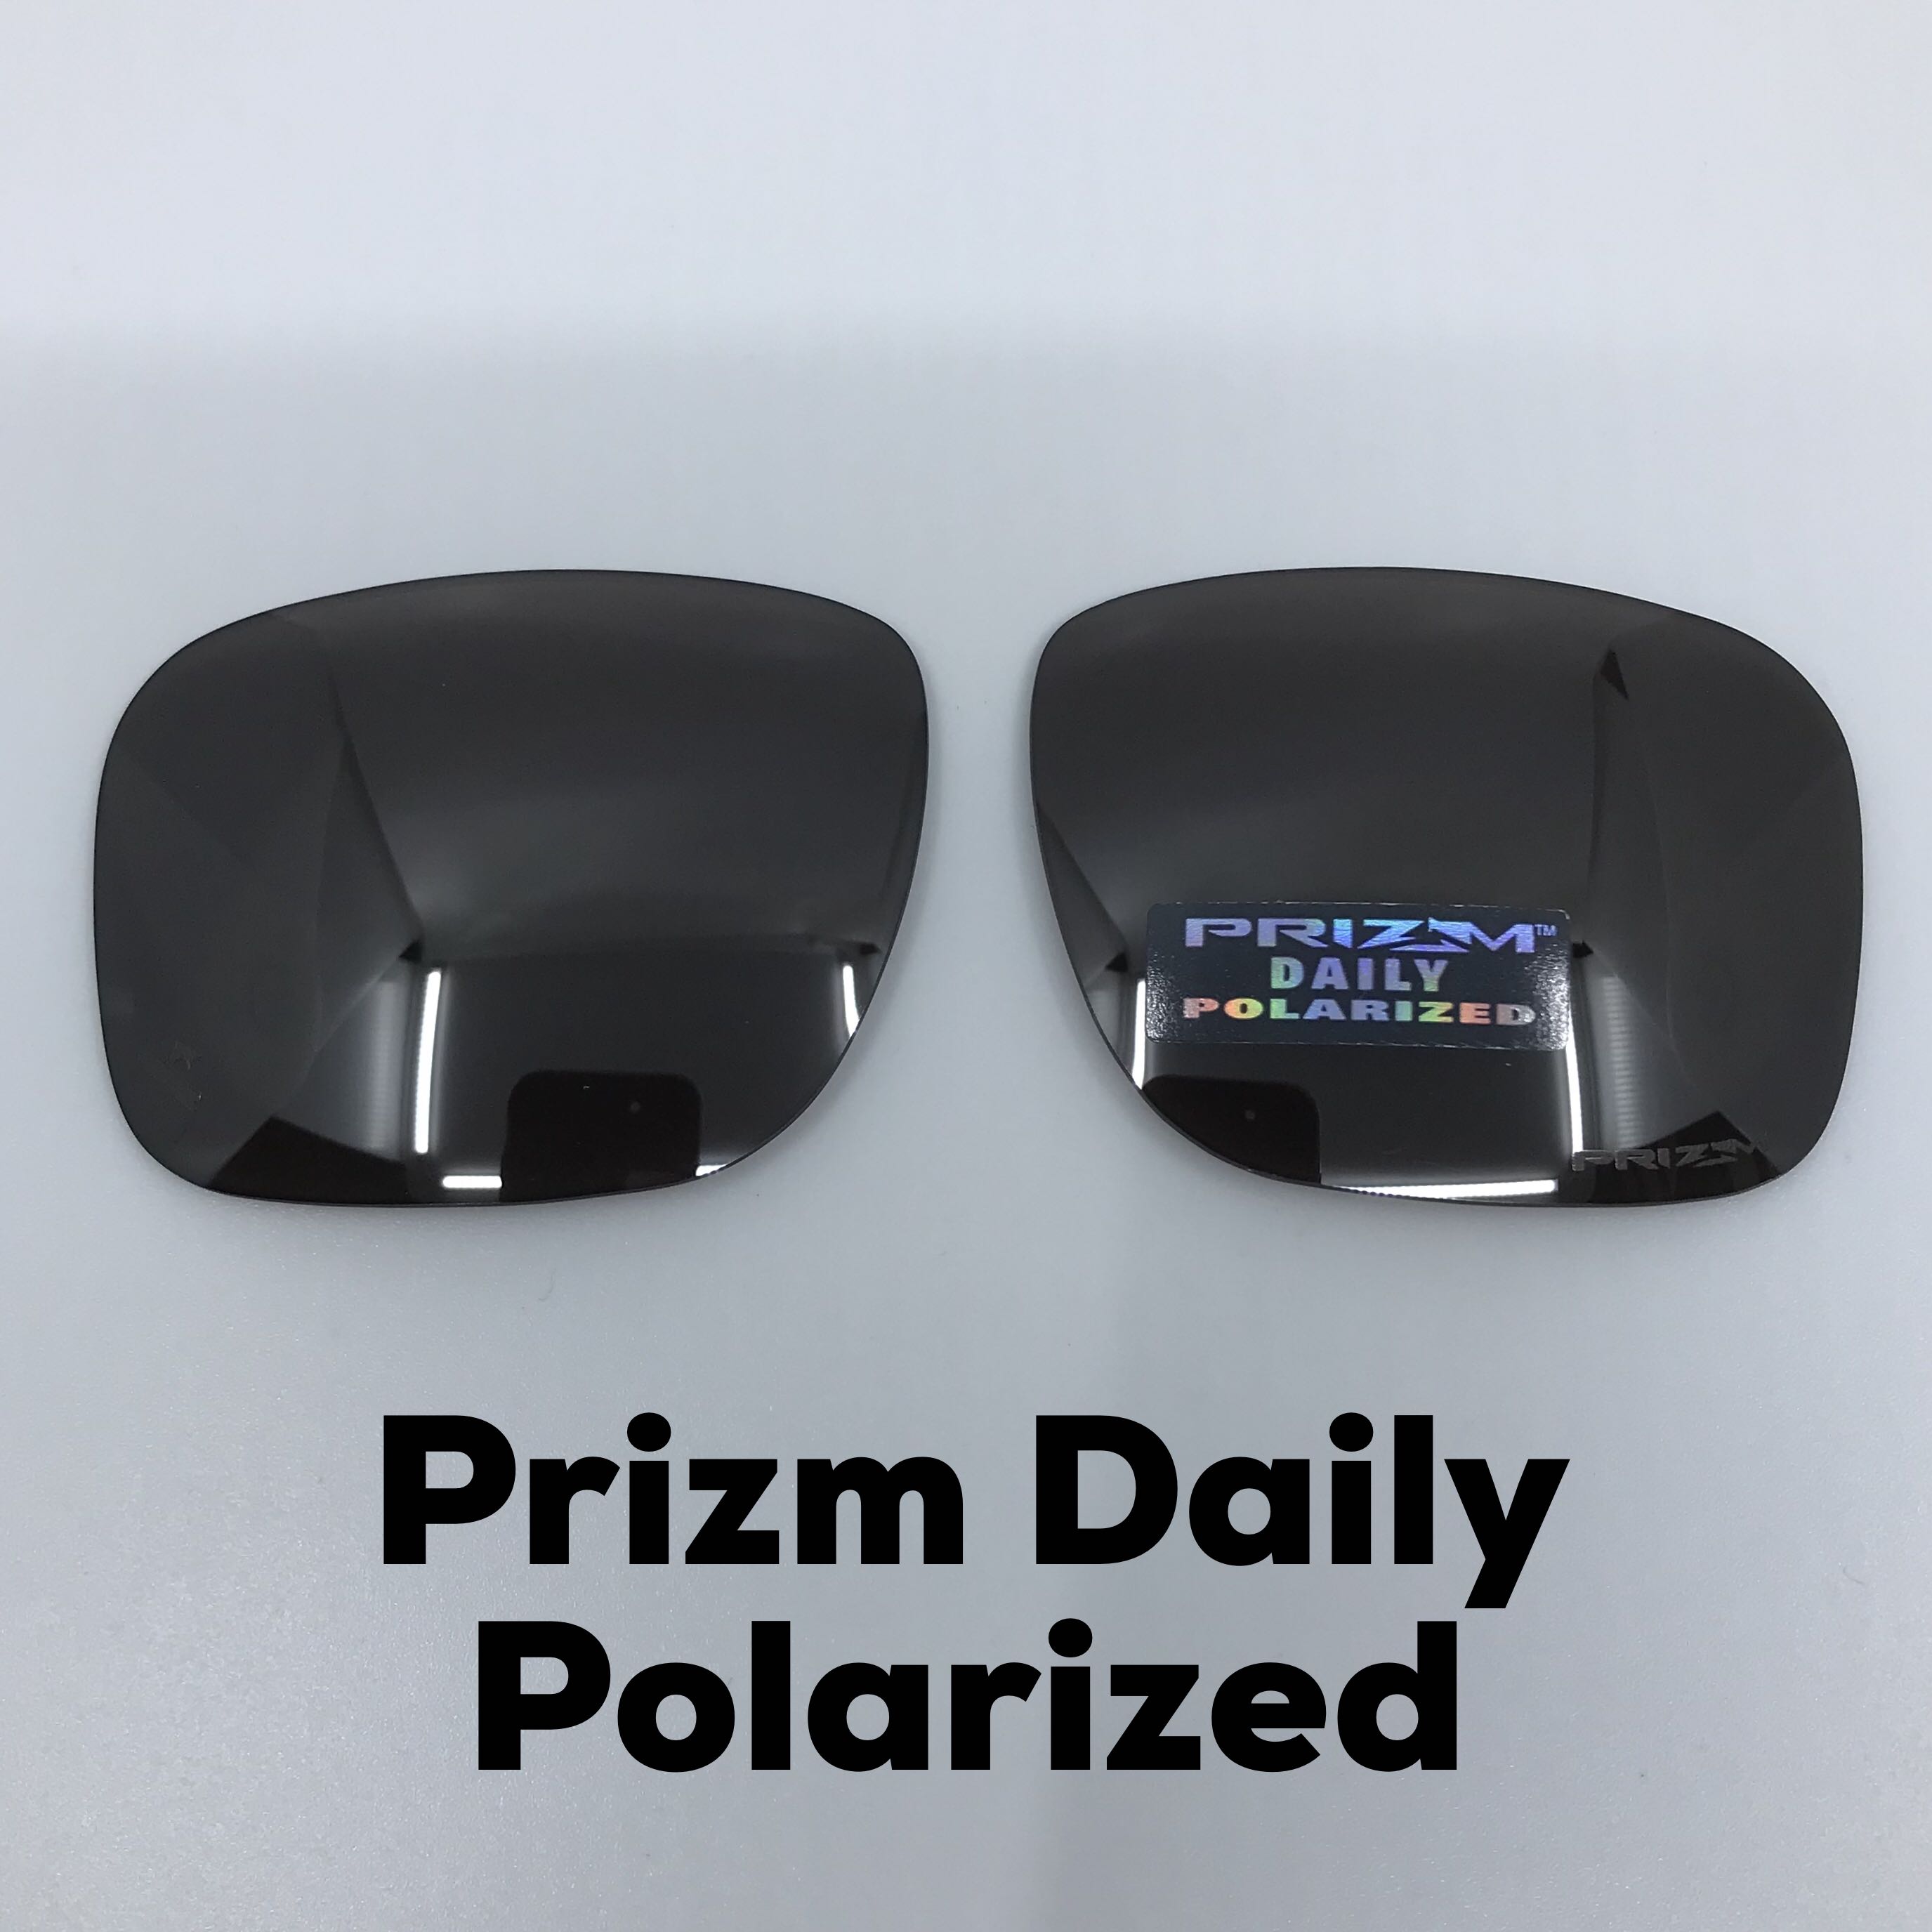 prizm daily polarized lenses